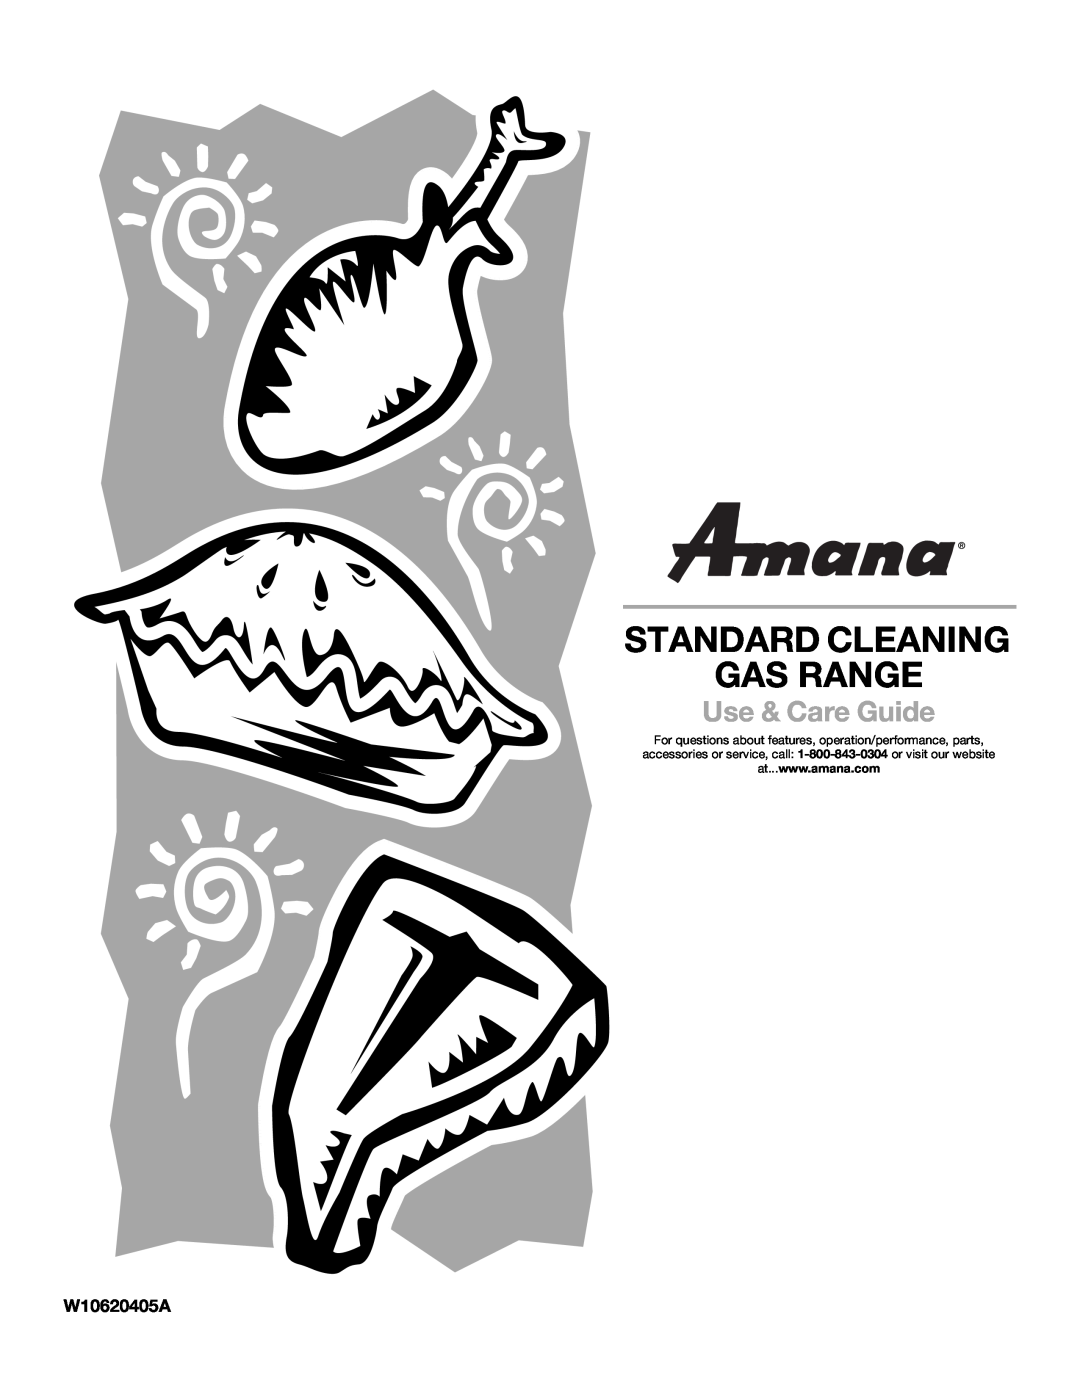 Amana standard cleaning gas range manual Standard Cleaning Gas Range, Use & Care Guide, W10620405A 